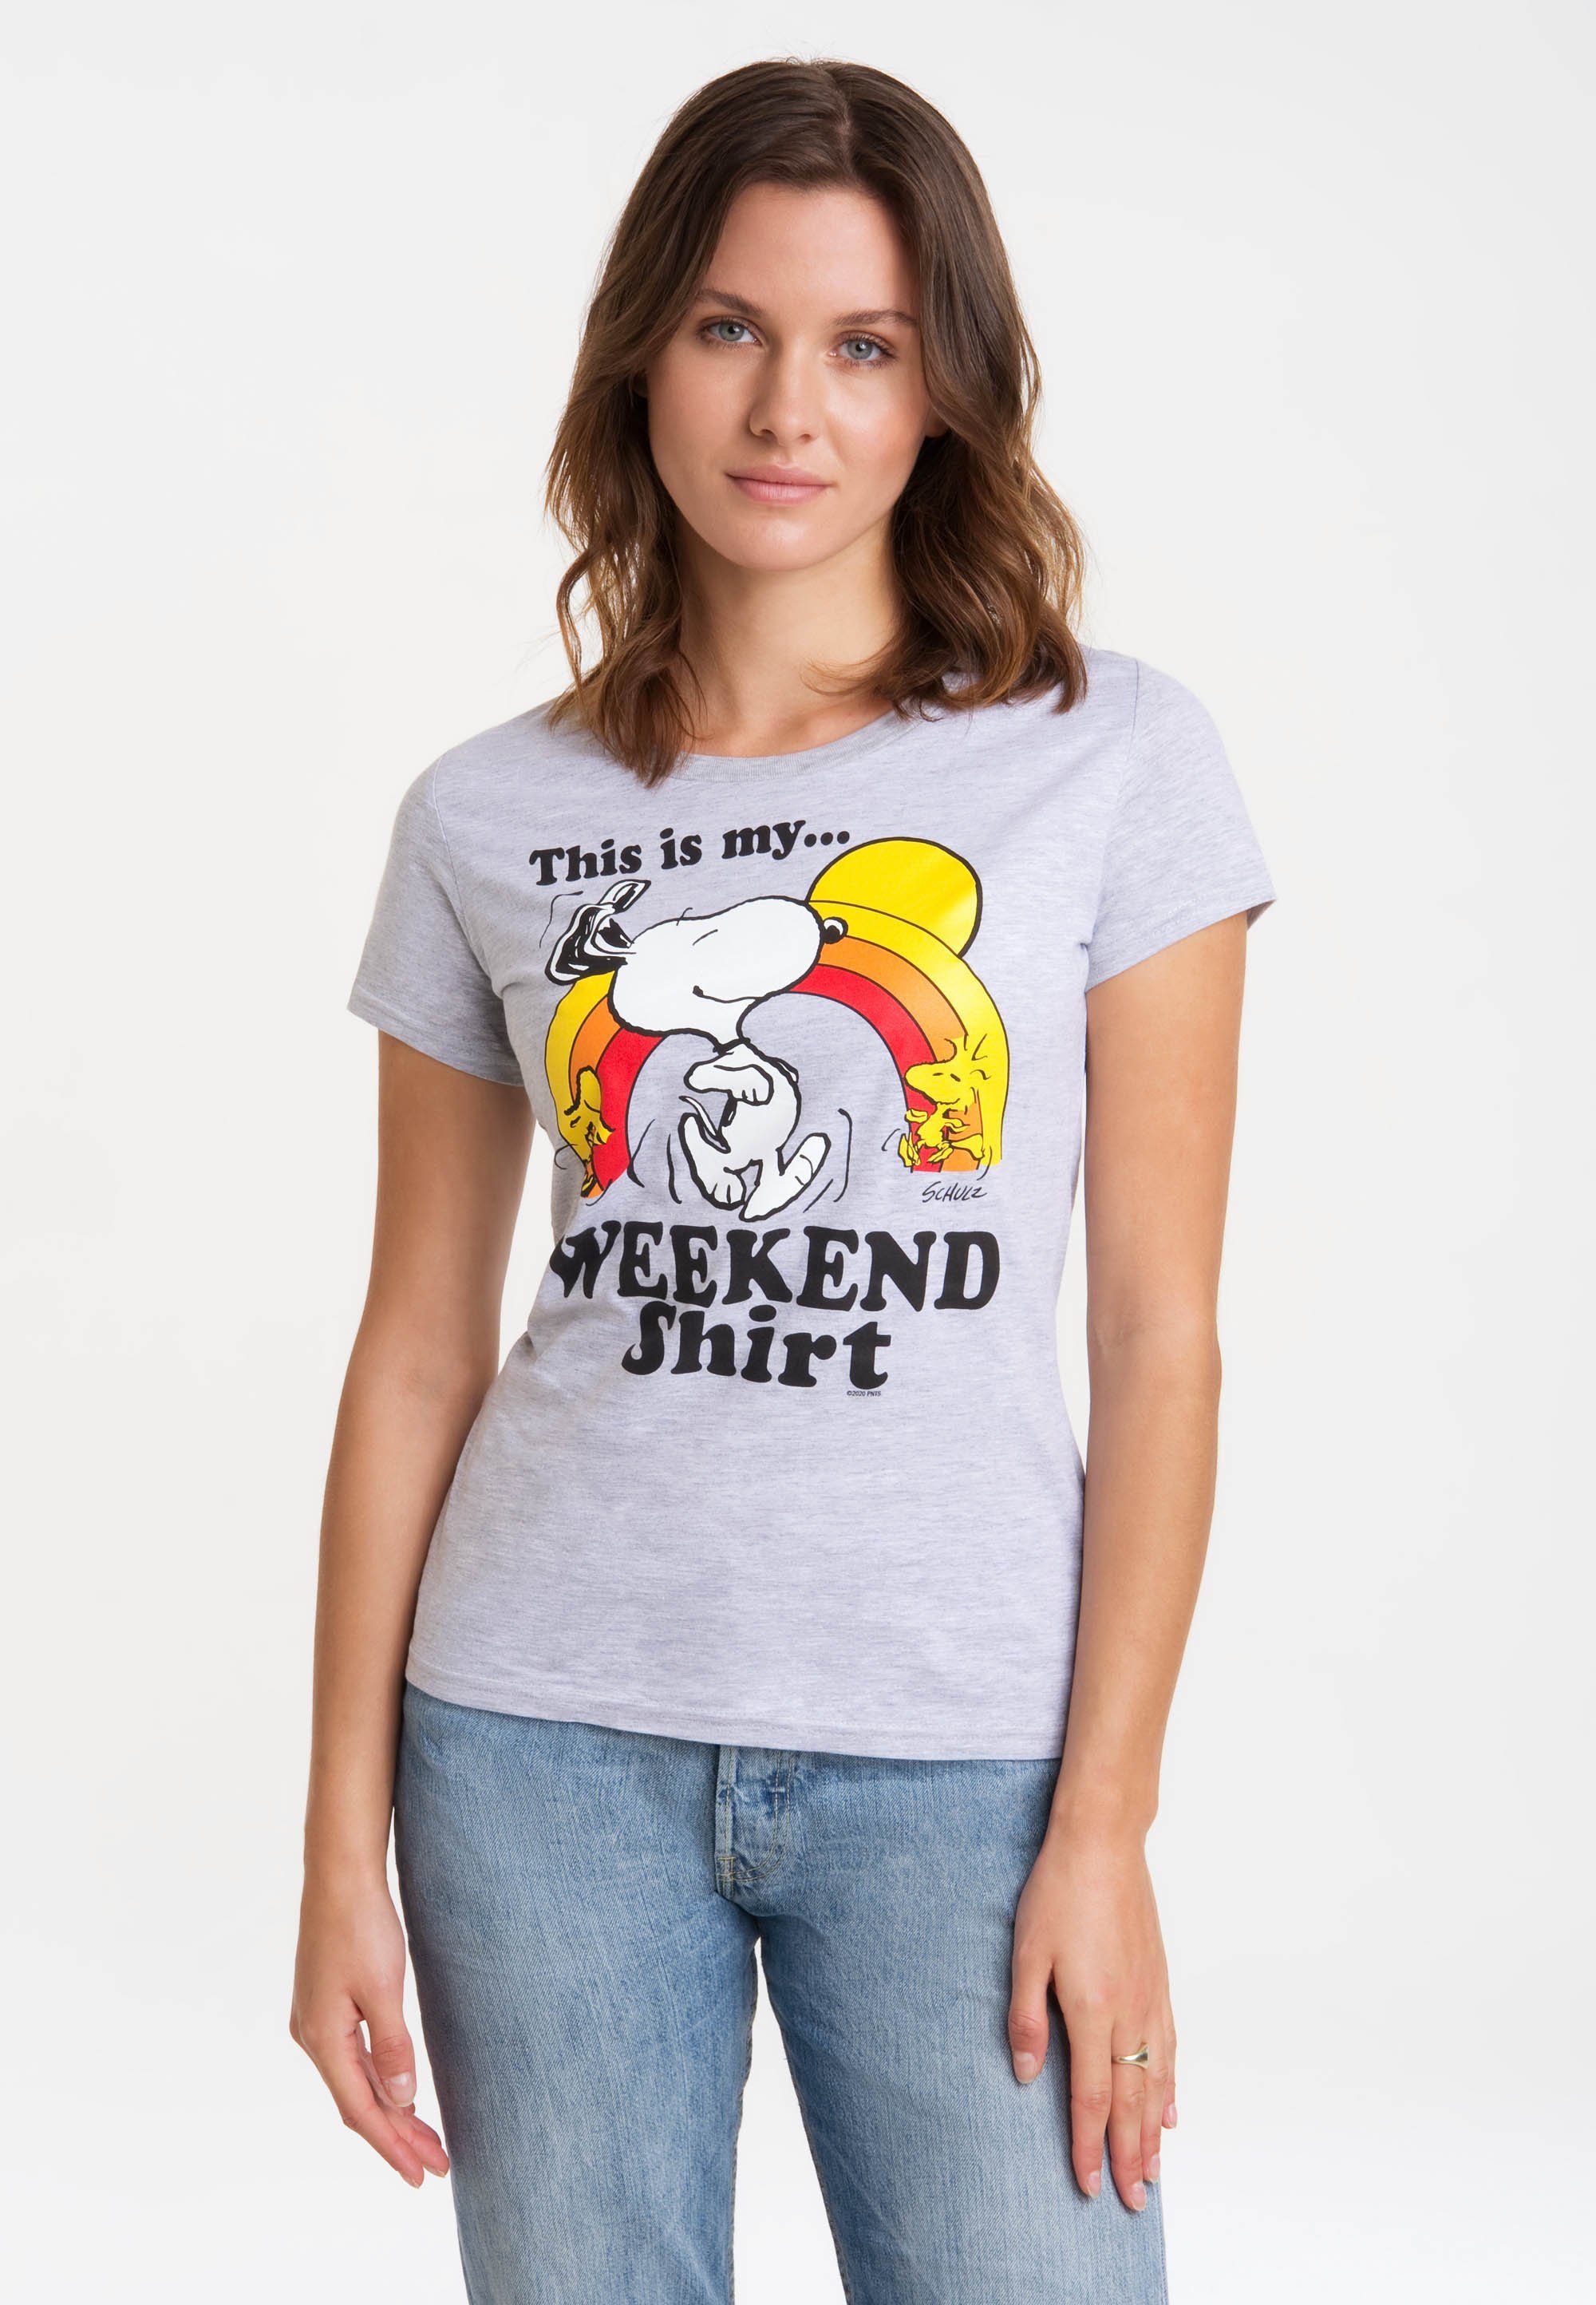 - & T-Shirt Originaldesign Woodstock Peanuts Snoopy LOGOSHIRT - Weekend lizenziertem mit